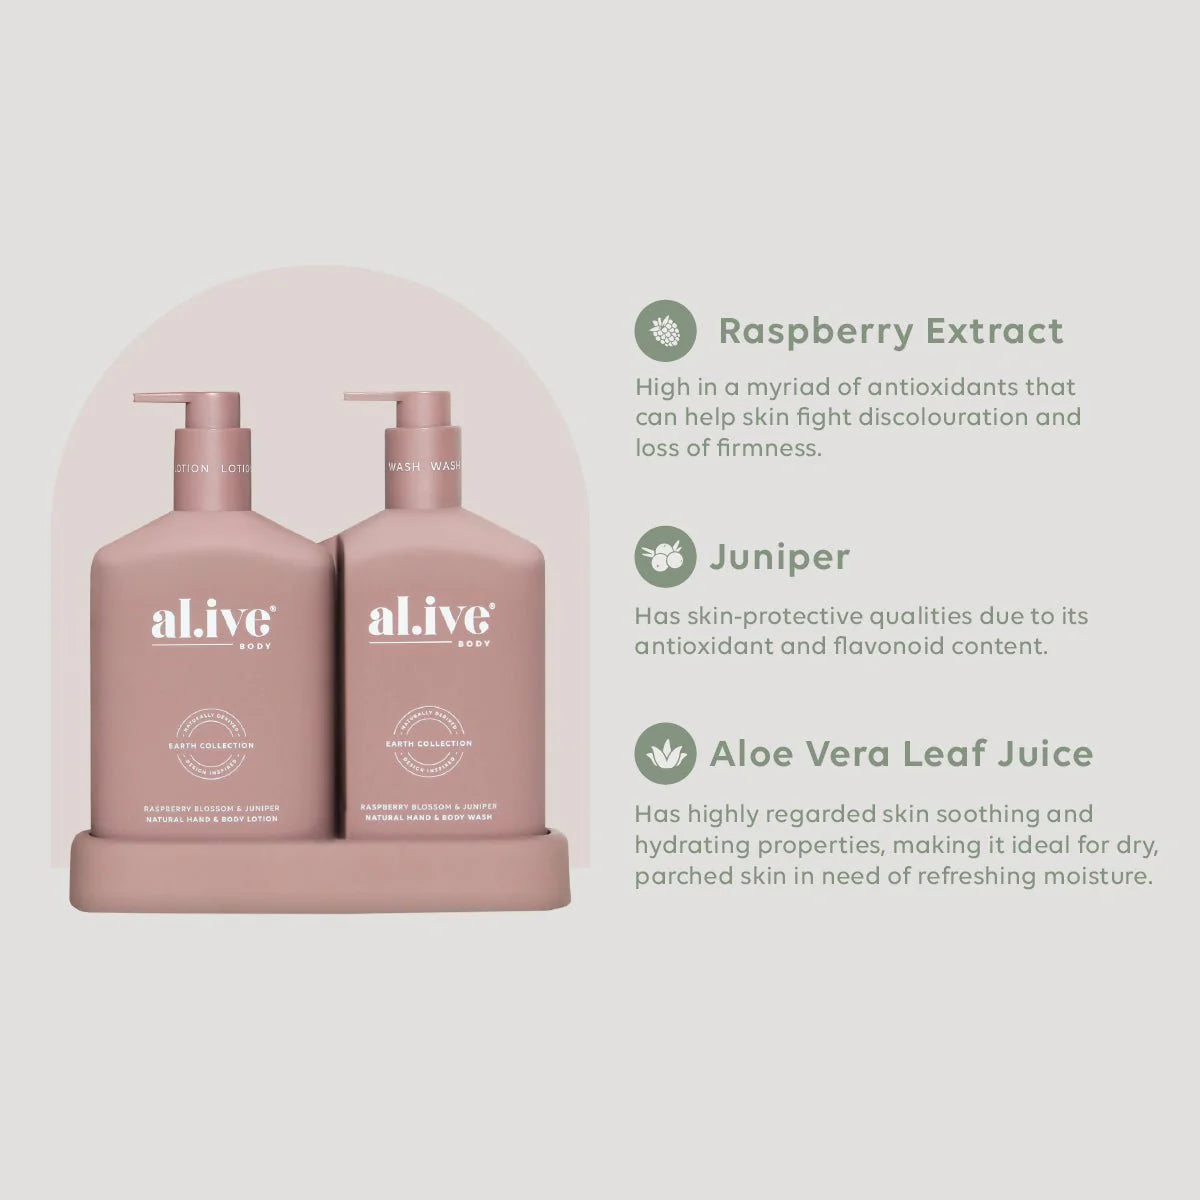 Alive Body Raspberry Blossom & Juniper Duo | The Ivy Plant Studio